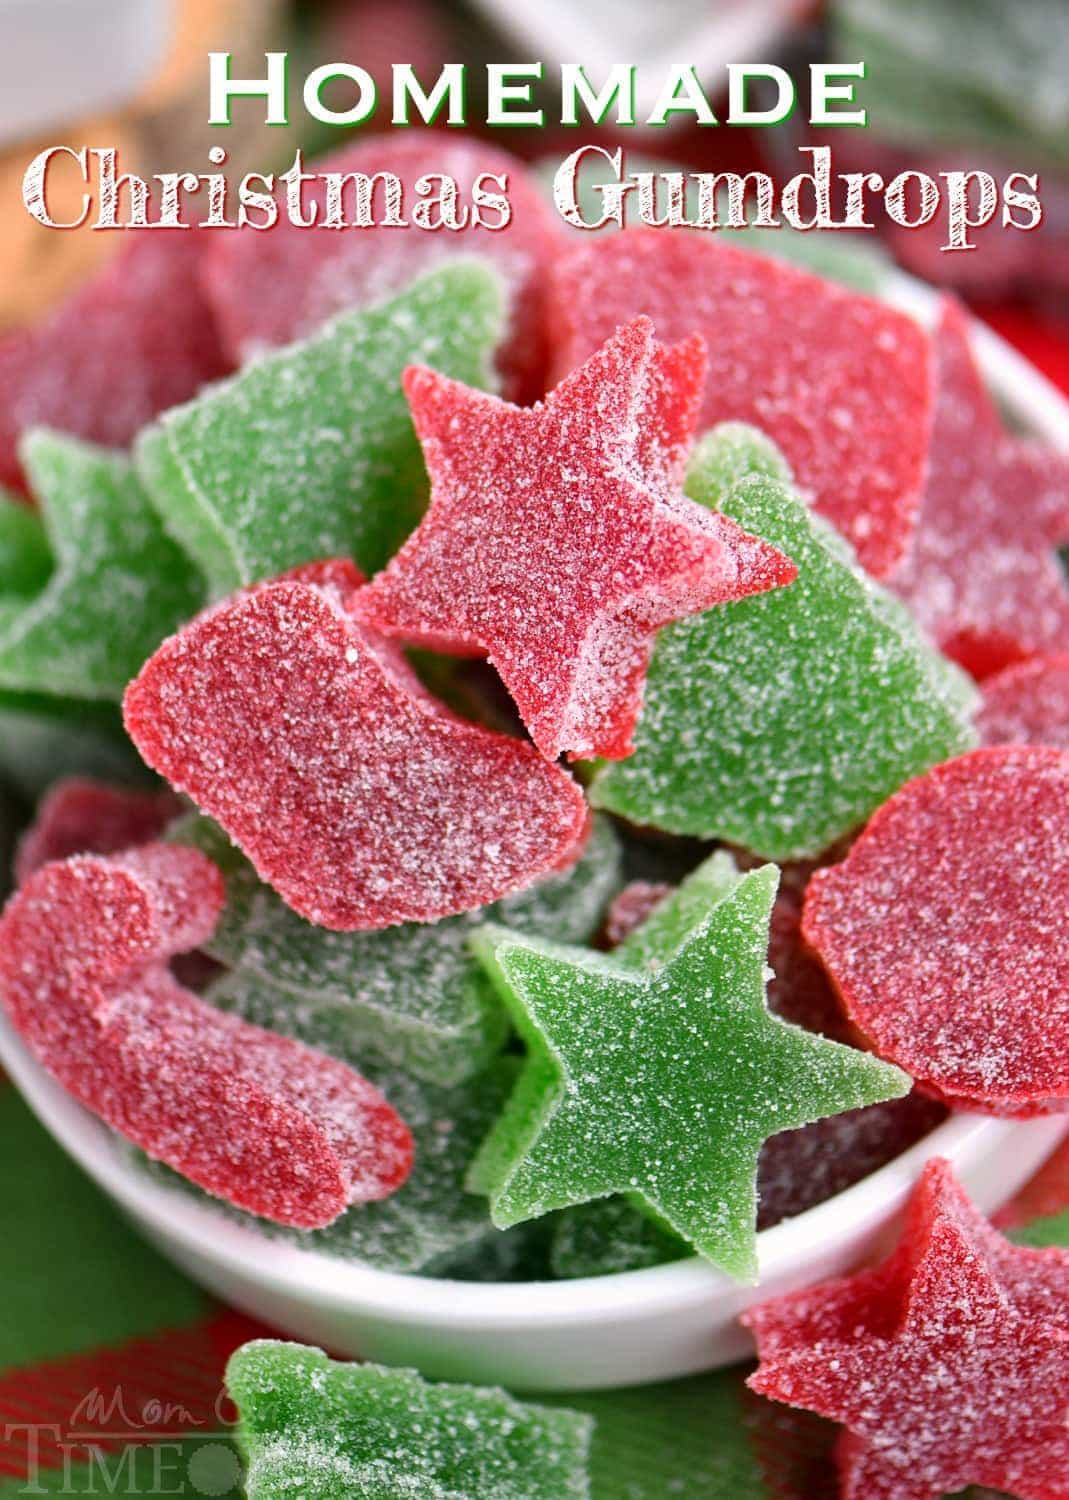 60 Homemade Christmas Candy Recipes for the Holidays